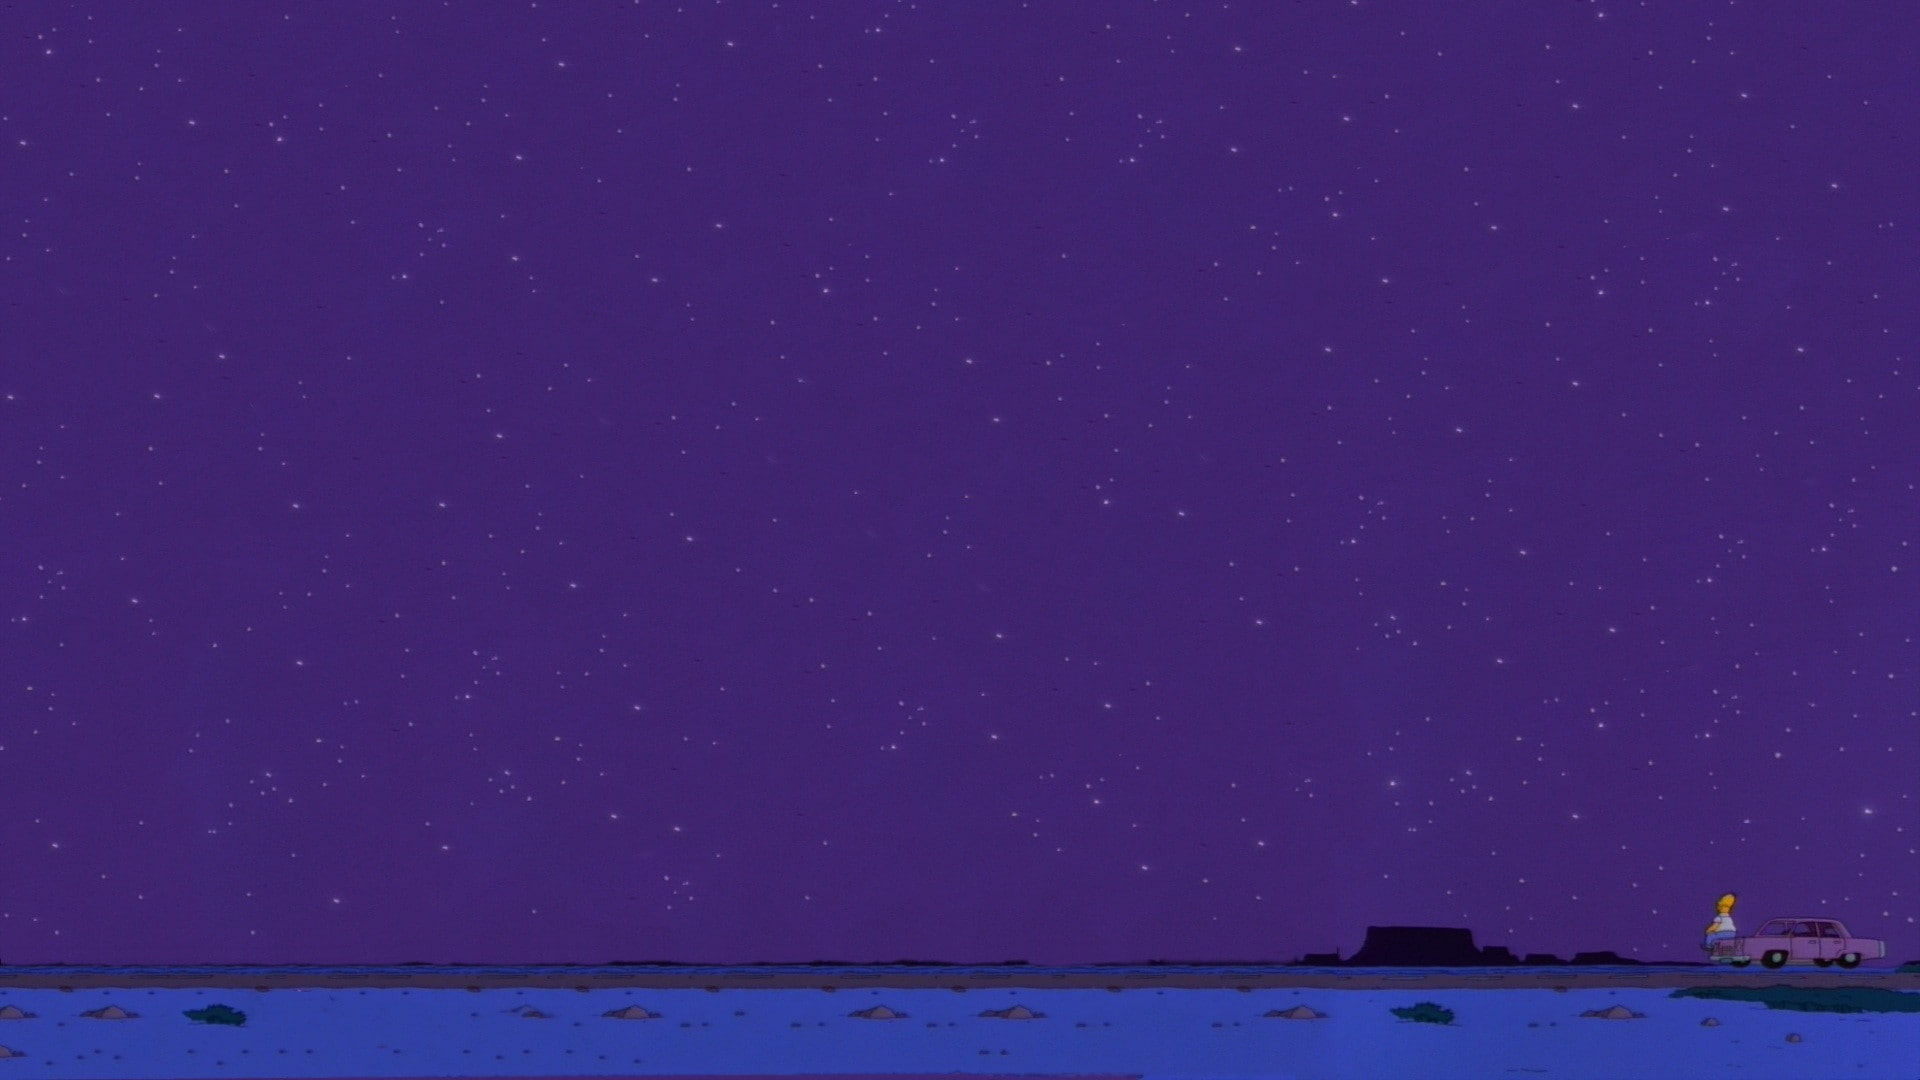 Free download | HD wallpaper: The Simpsons, night sky, stars, scenics ...